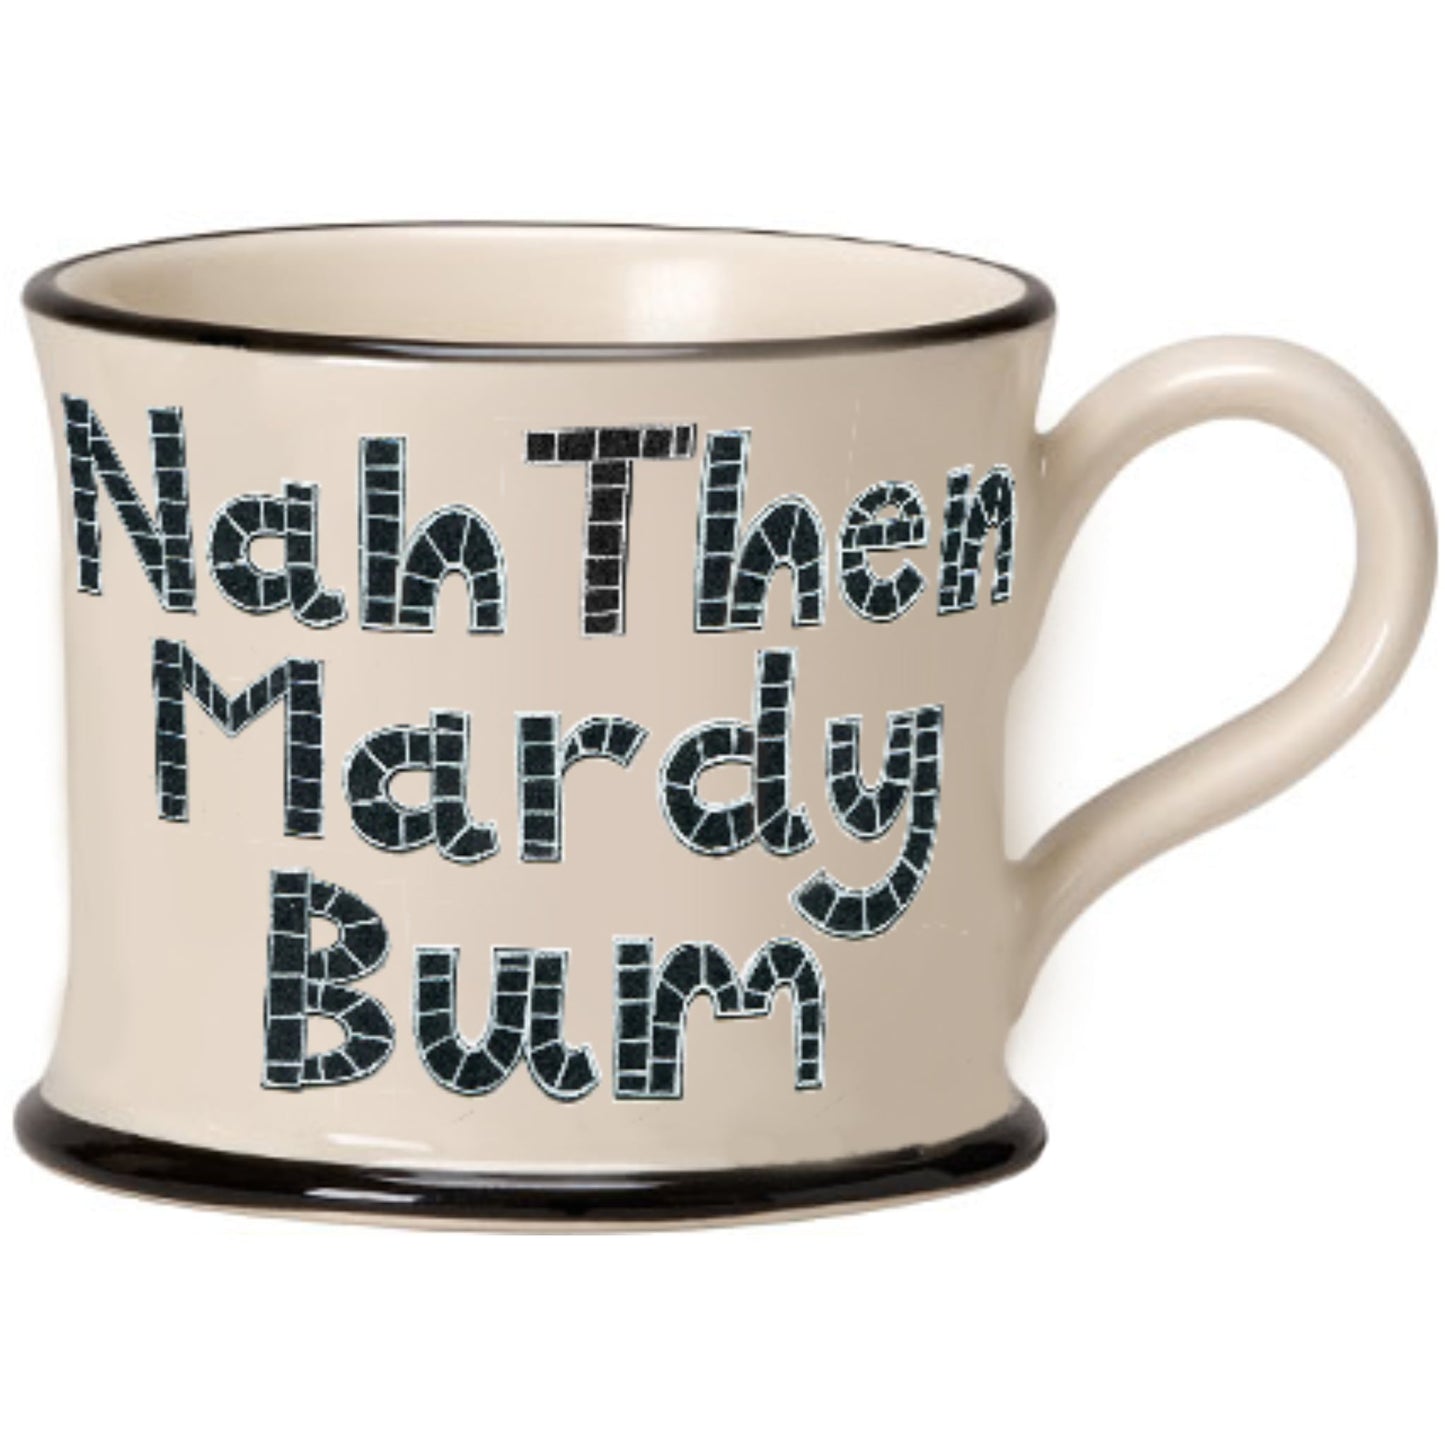 Nah Then Mardy Bum Mug - The Great Yorkshire Shop